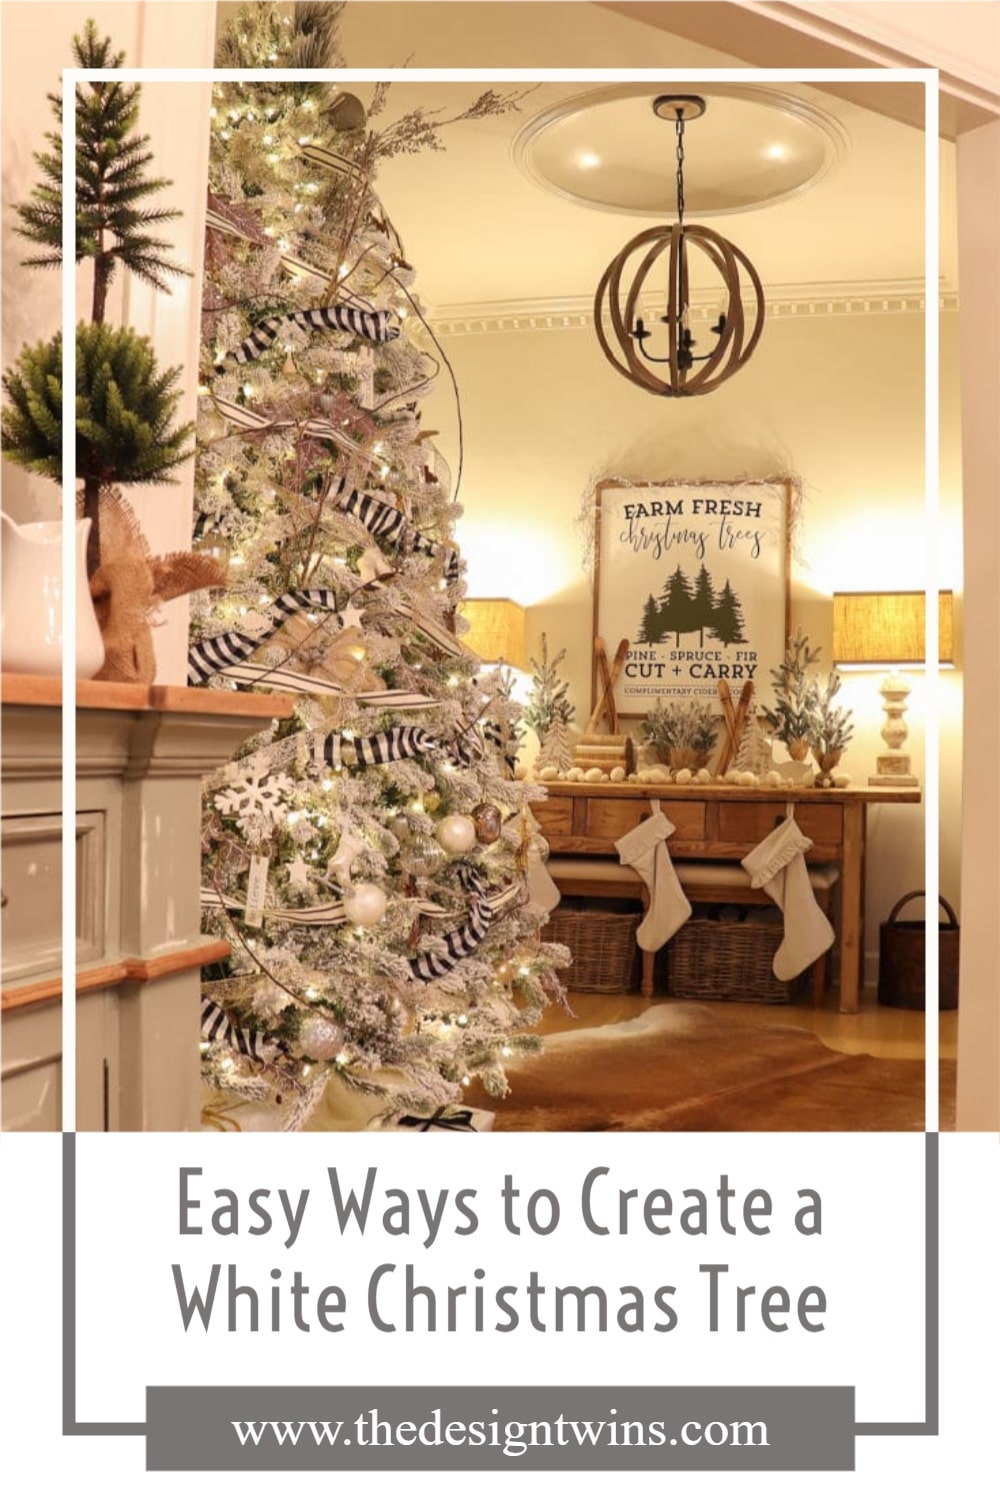 6 Easy Ways to Achieve an Irresistibly Festive White Christmas Tree